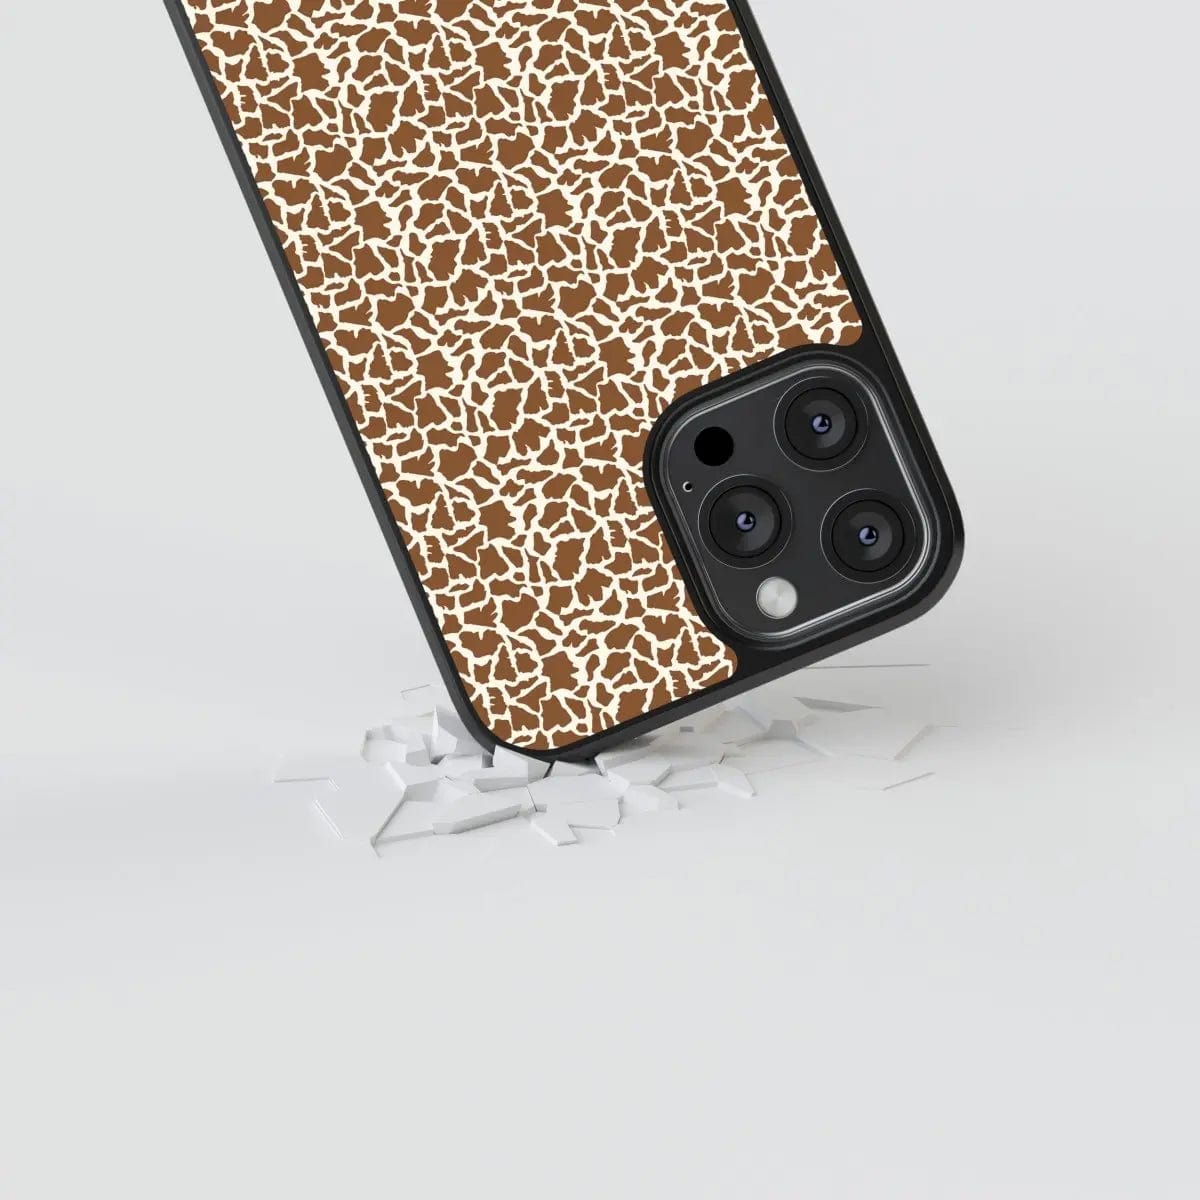 Phone case "Giraffe" - Artcase